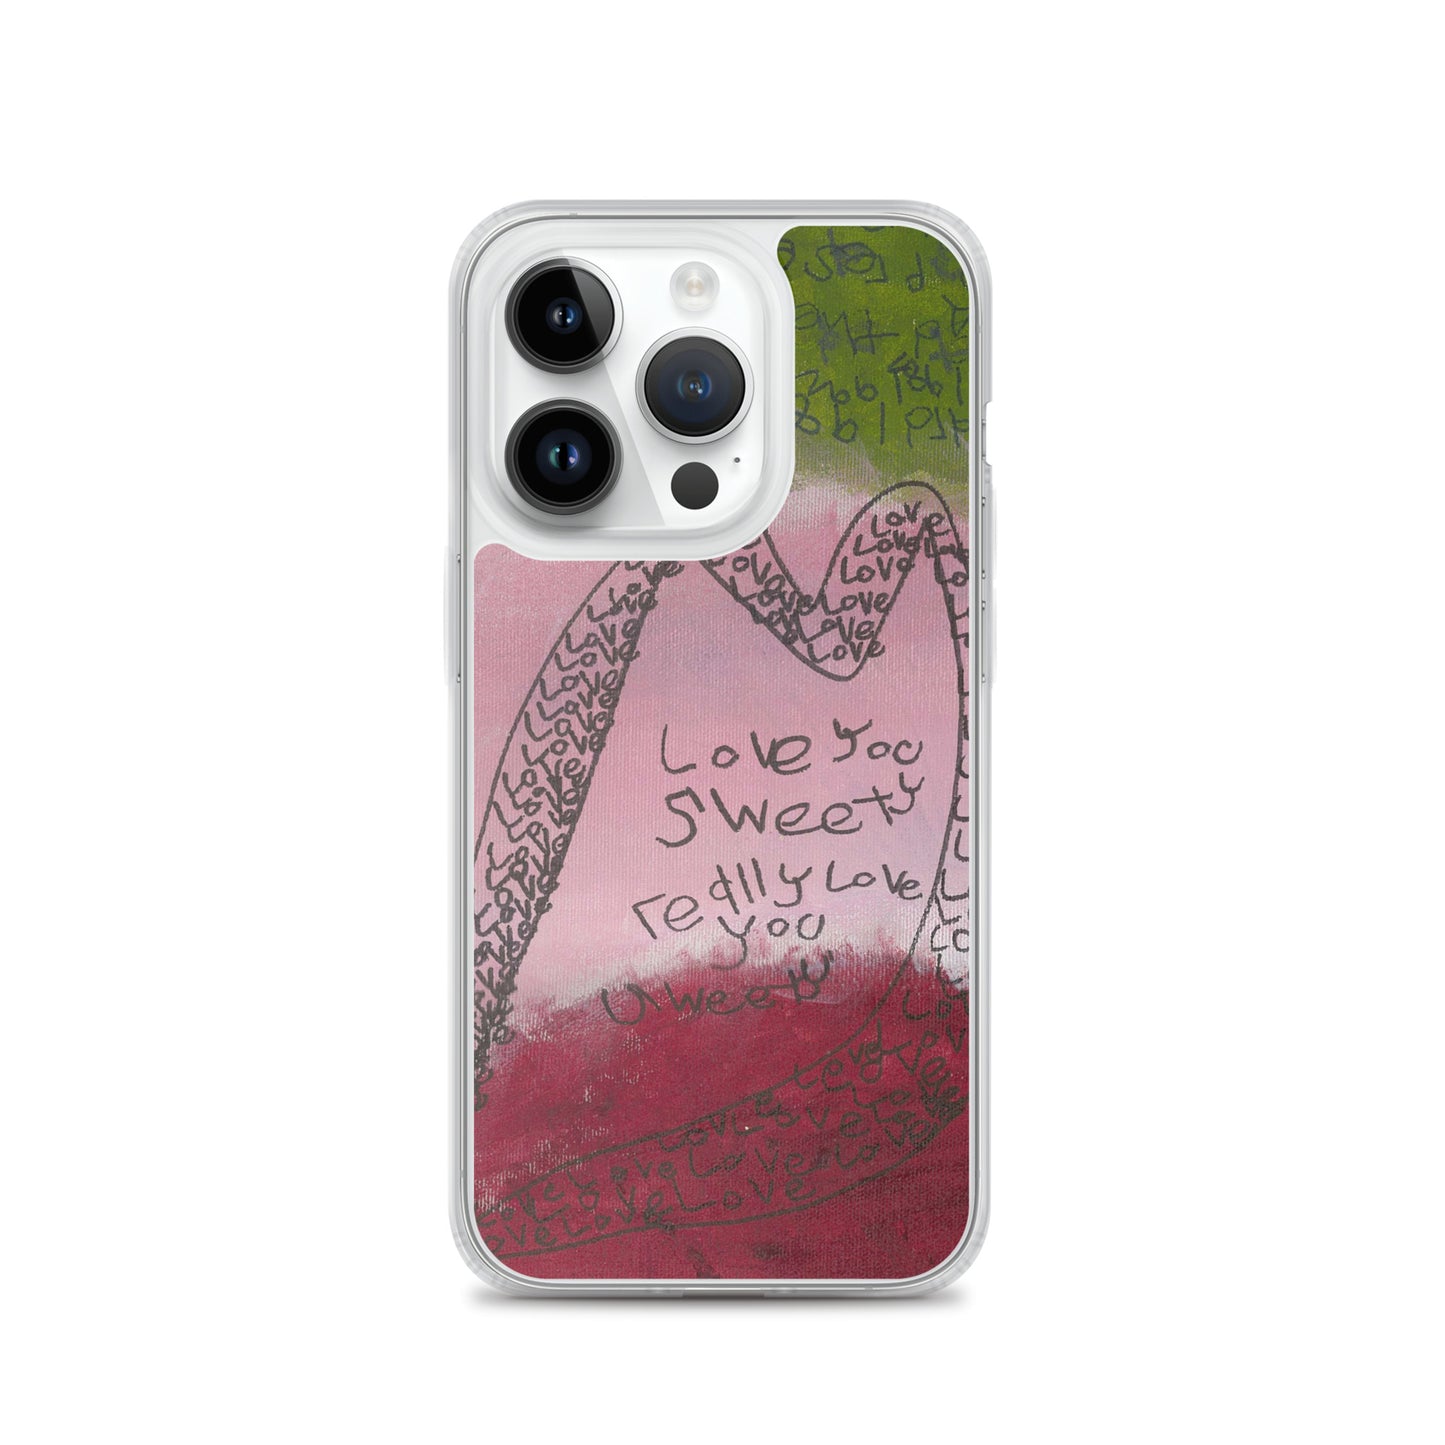 iPhone Case - "Love and True Love"